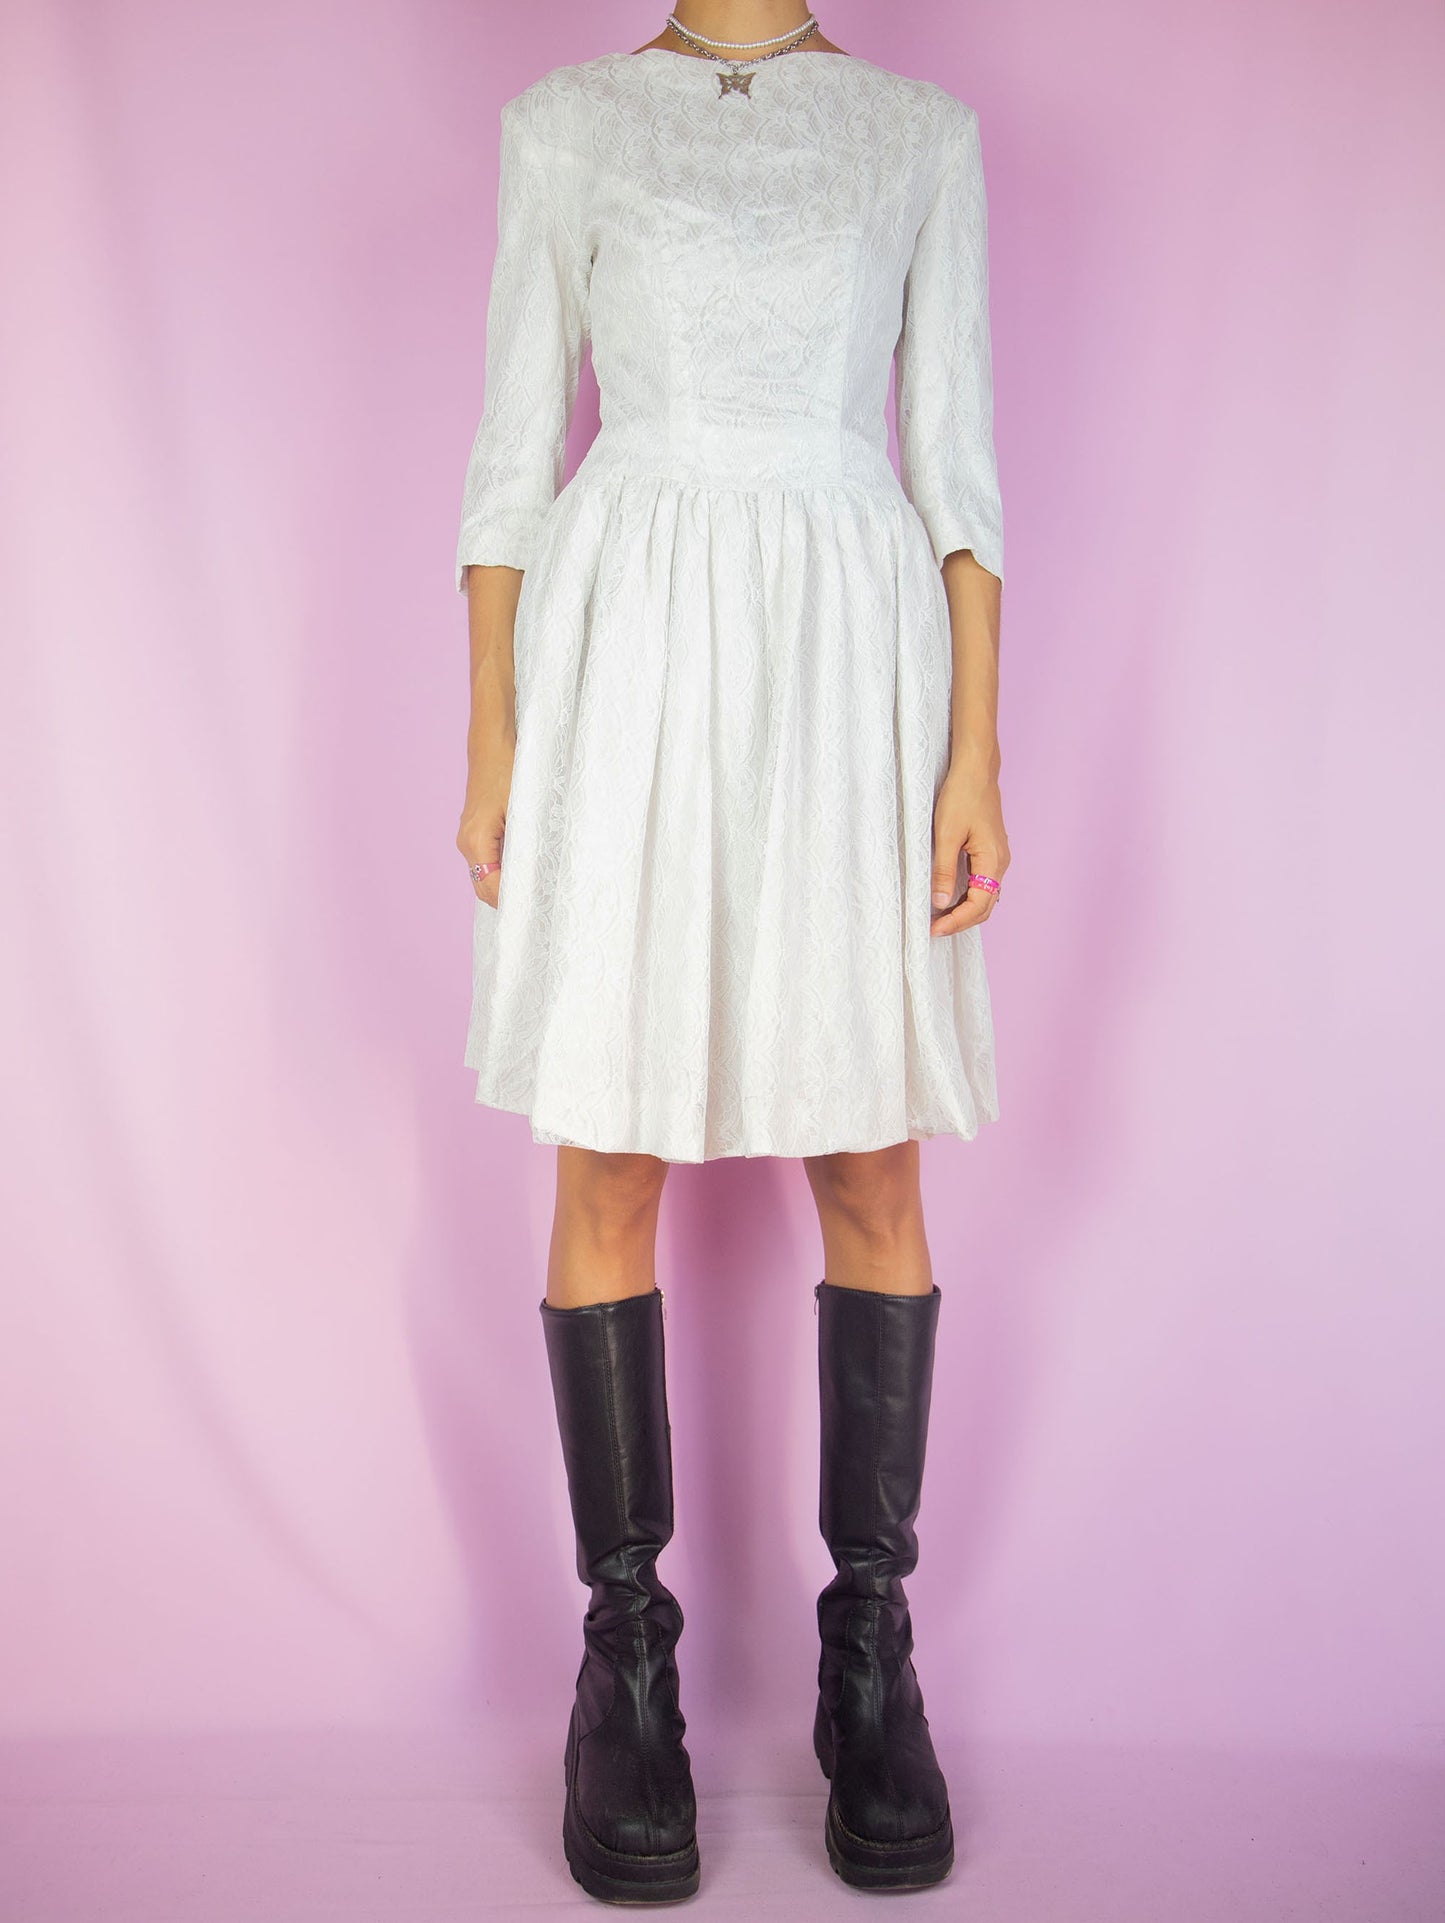 Vintage 90's White Lace Mini Dress - S